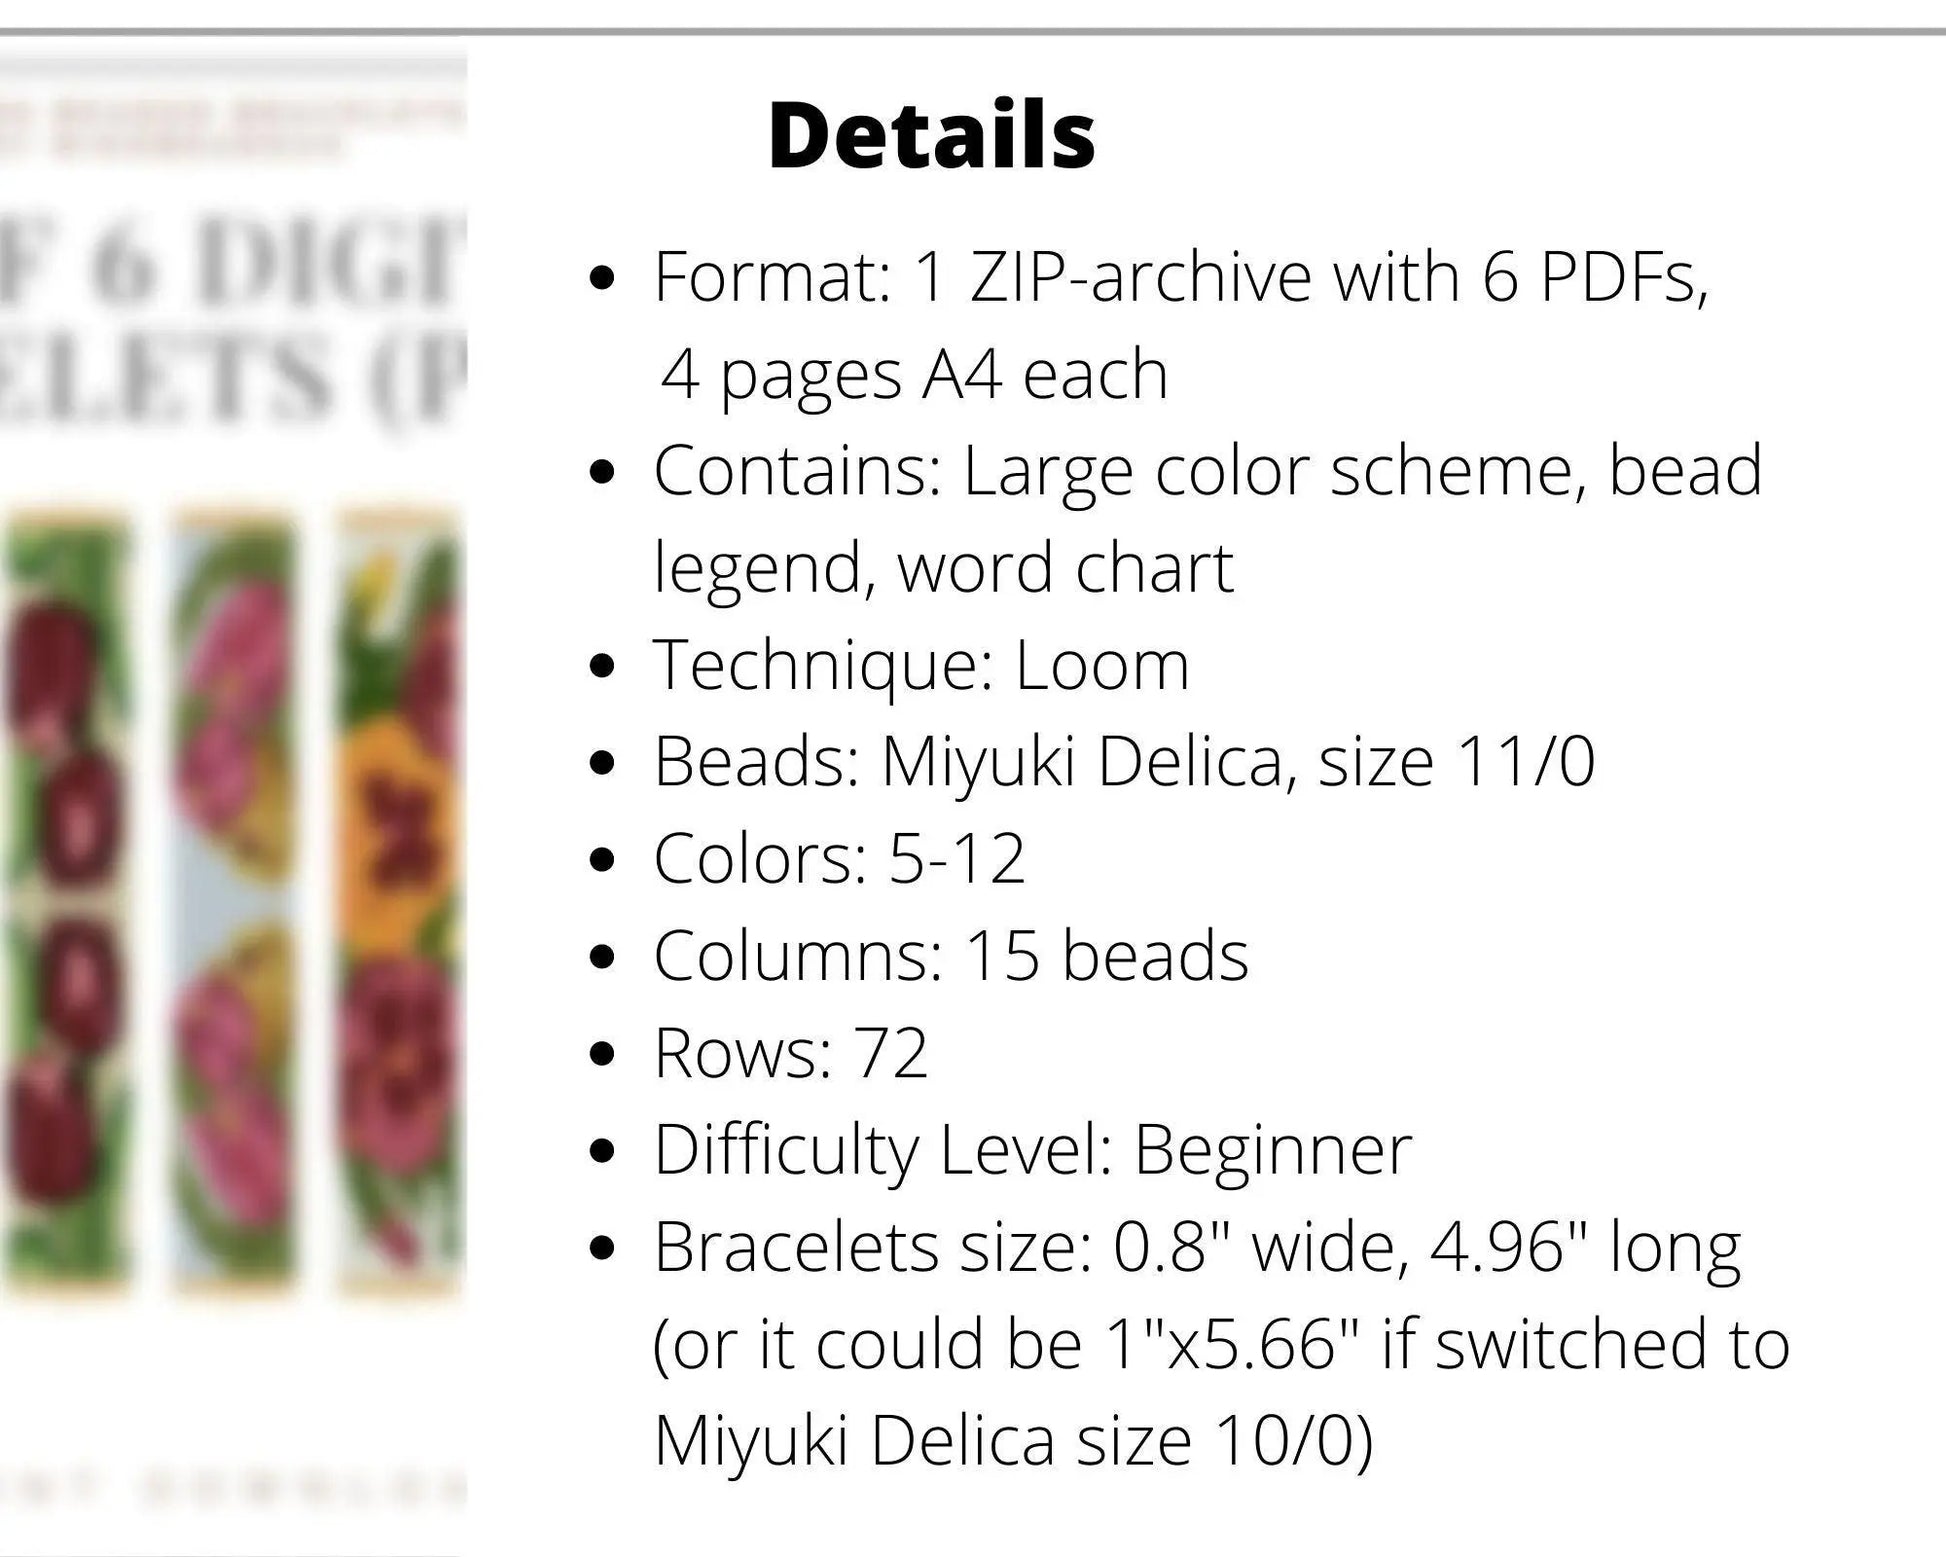 Set of 6 Flower Loom Bracelets patterns for Miyuki Delica - NikoBeadsUA